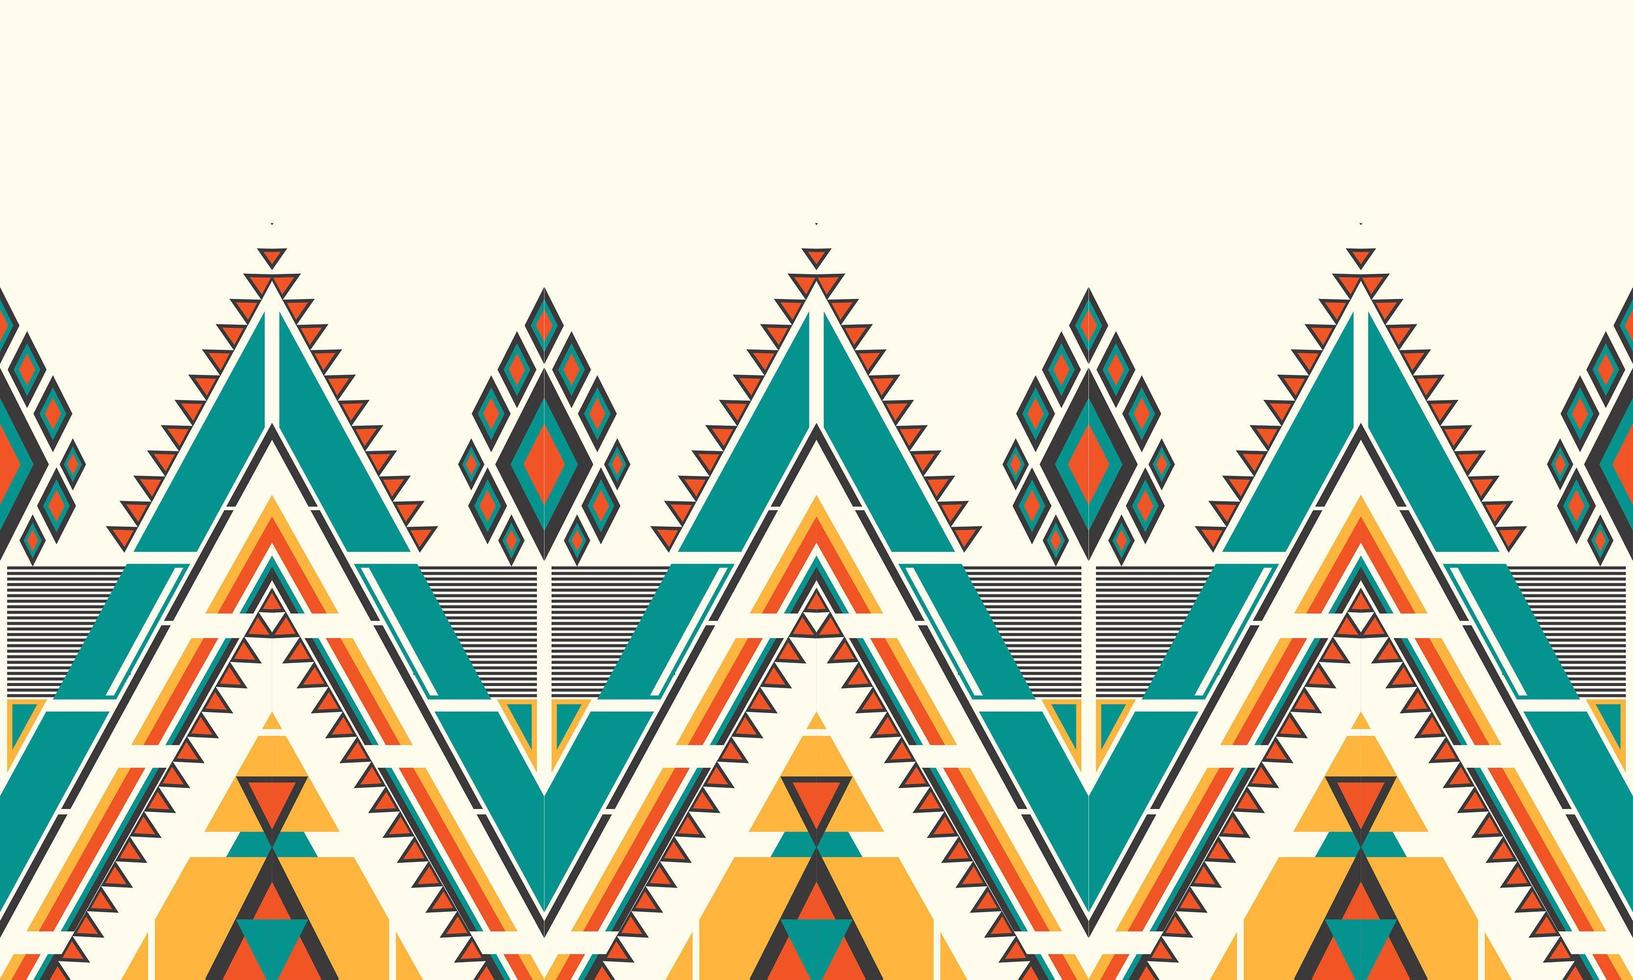 geometrische ethnische Musterstickerei .carpet,wallpaper,clothing,wrapping,batik,fabric,vector illustration stick style. vektor